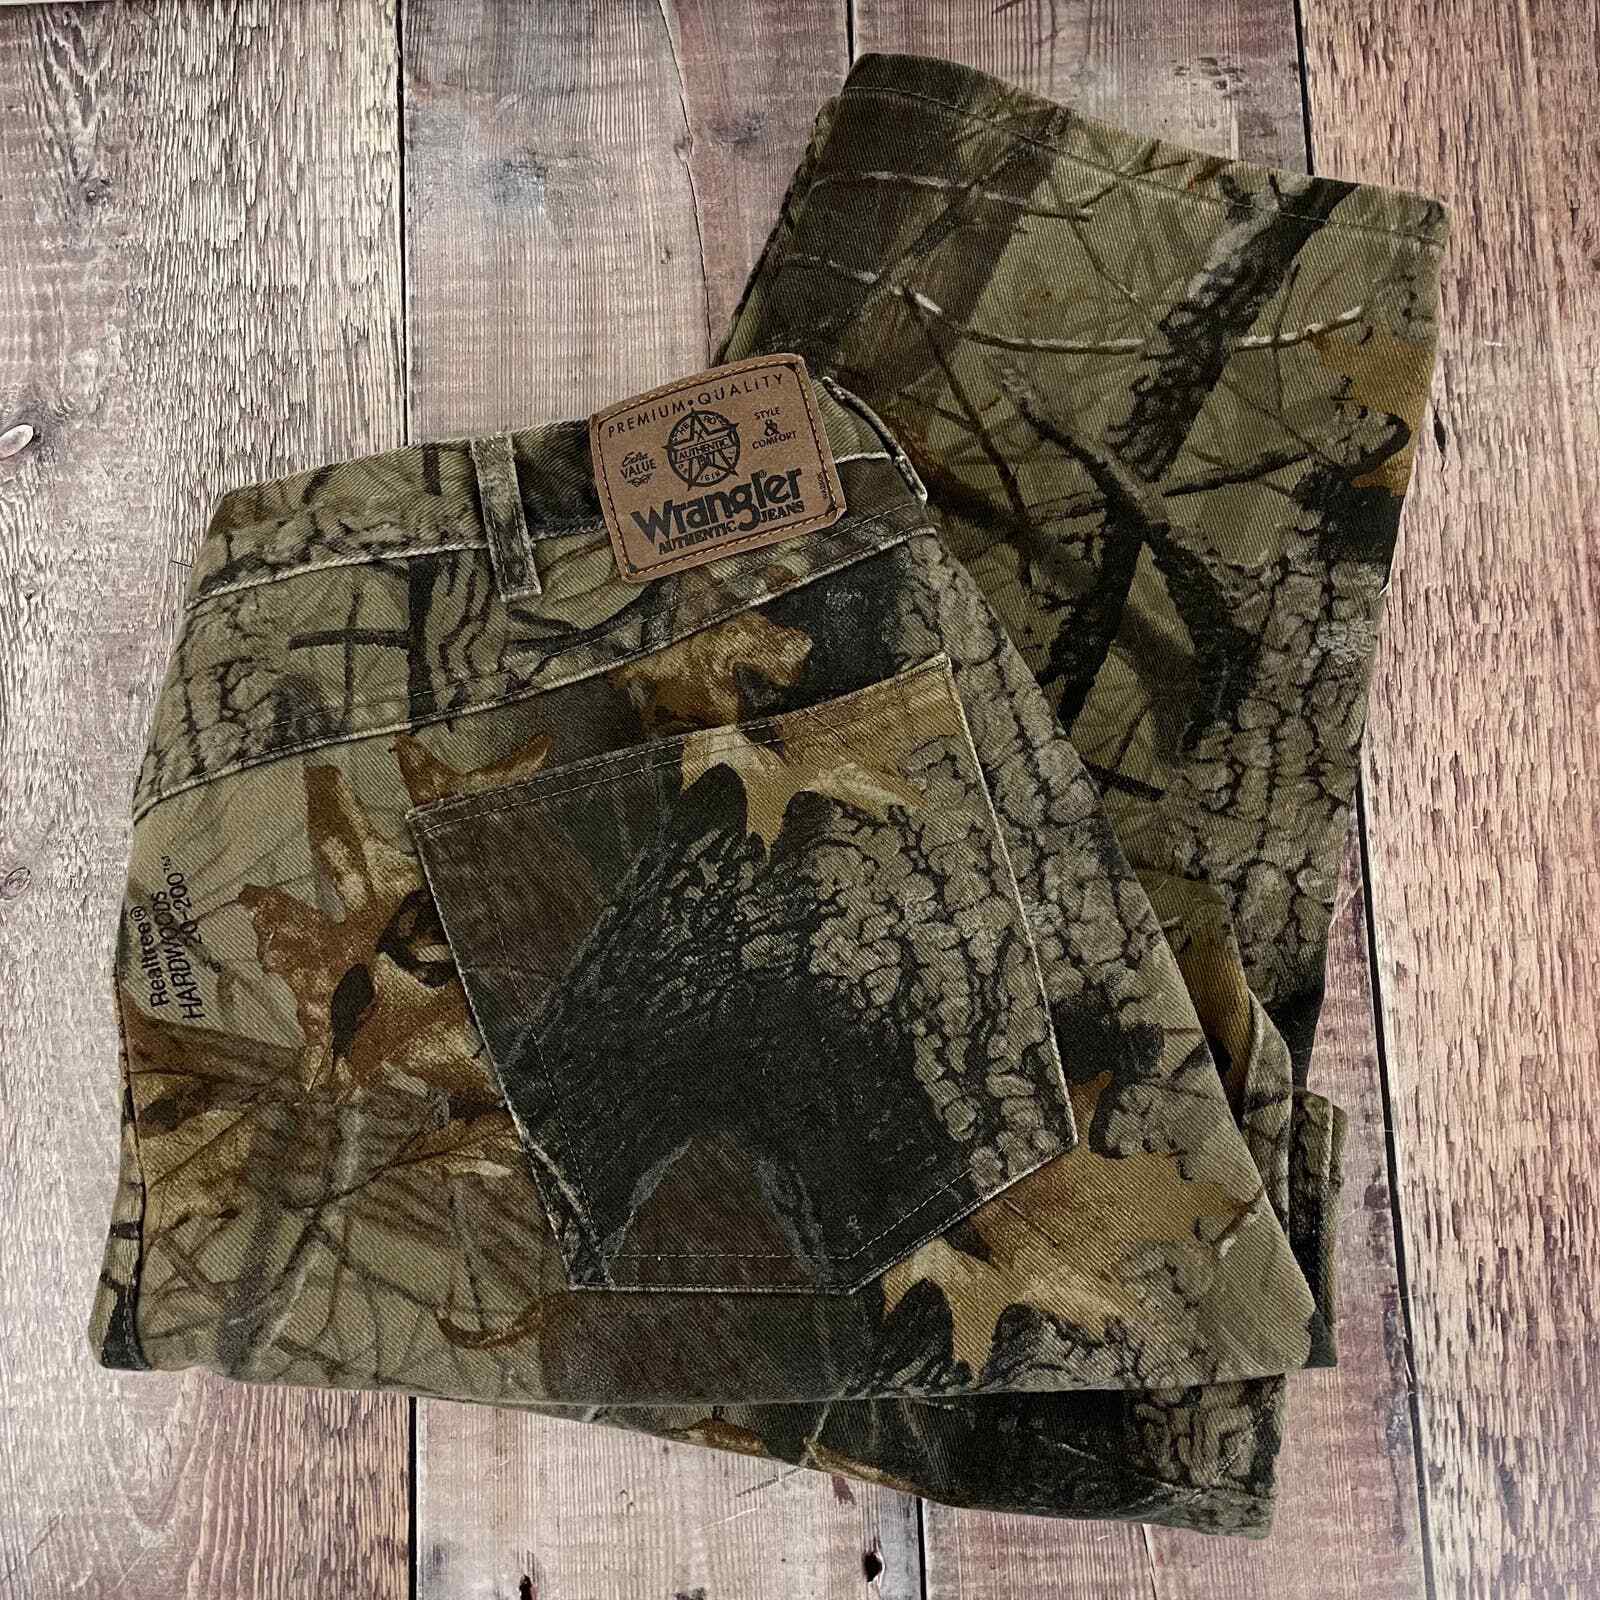 Wrangler Realtree Camo Jeans Mens 42x30 Hardwood Camouflage Hunting Denim |  eBay